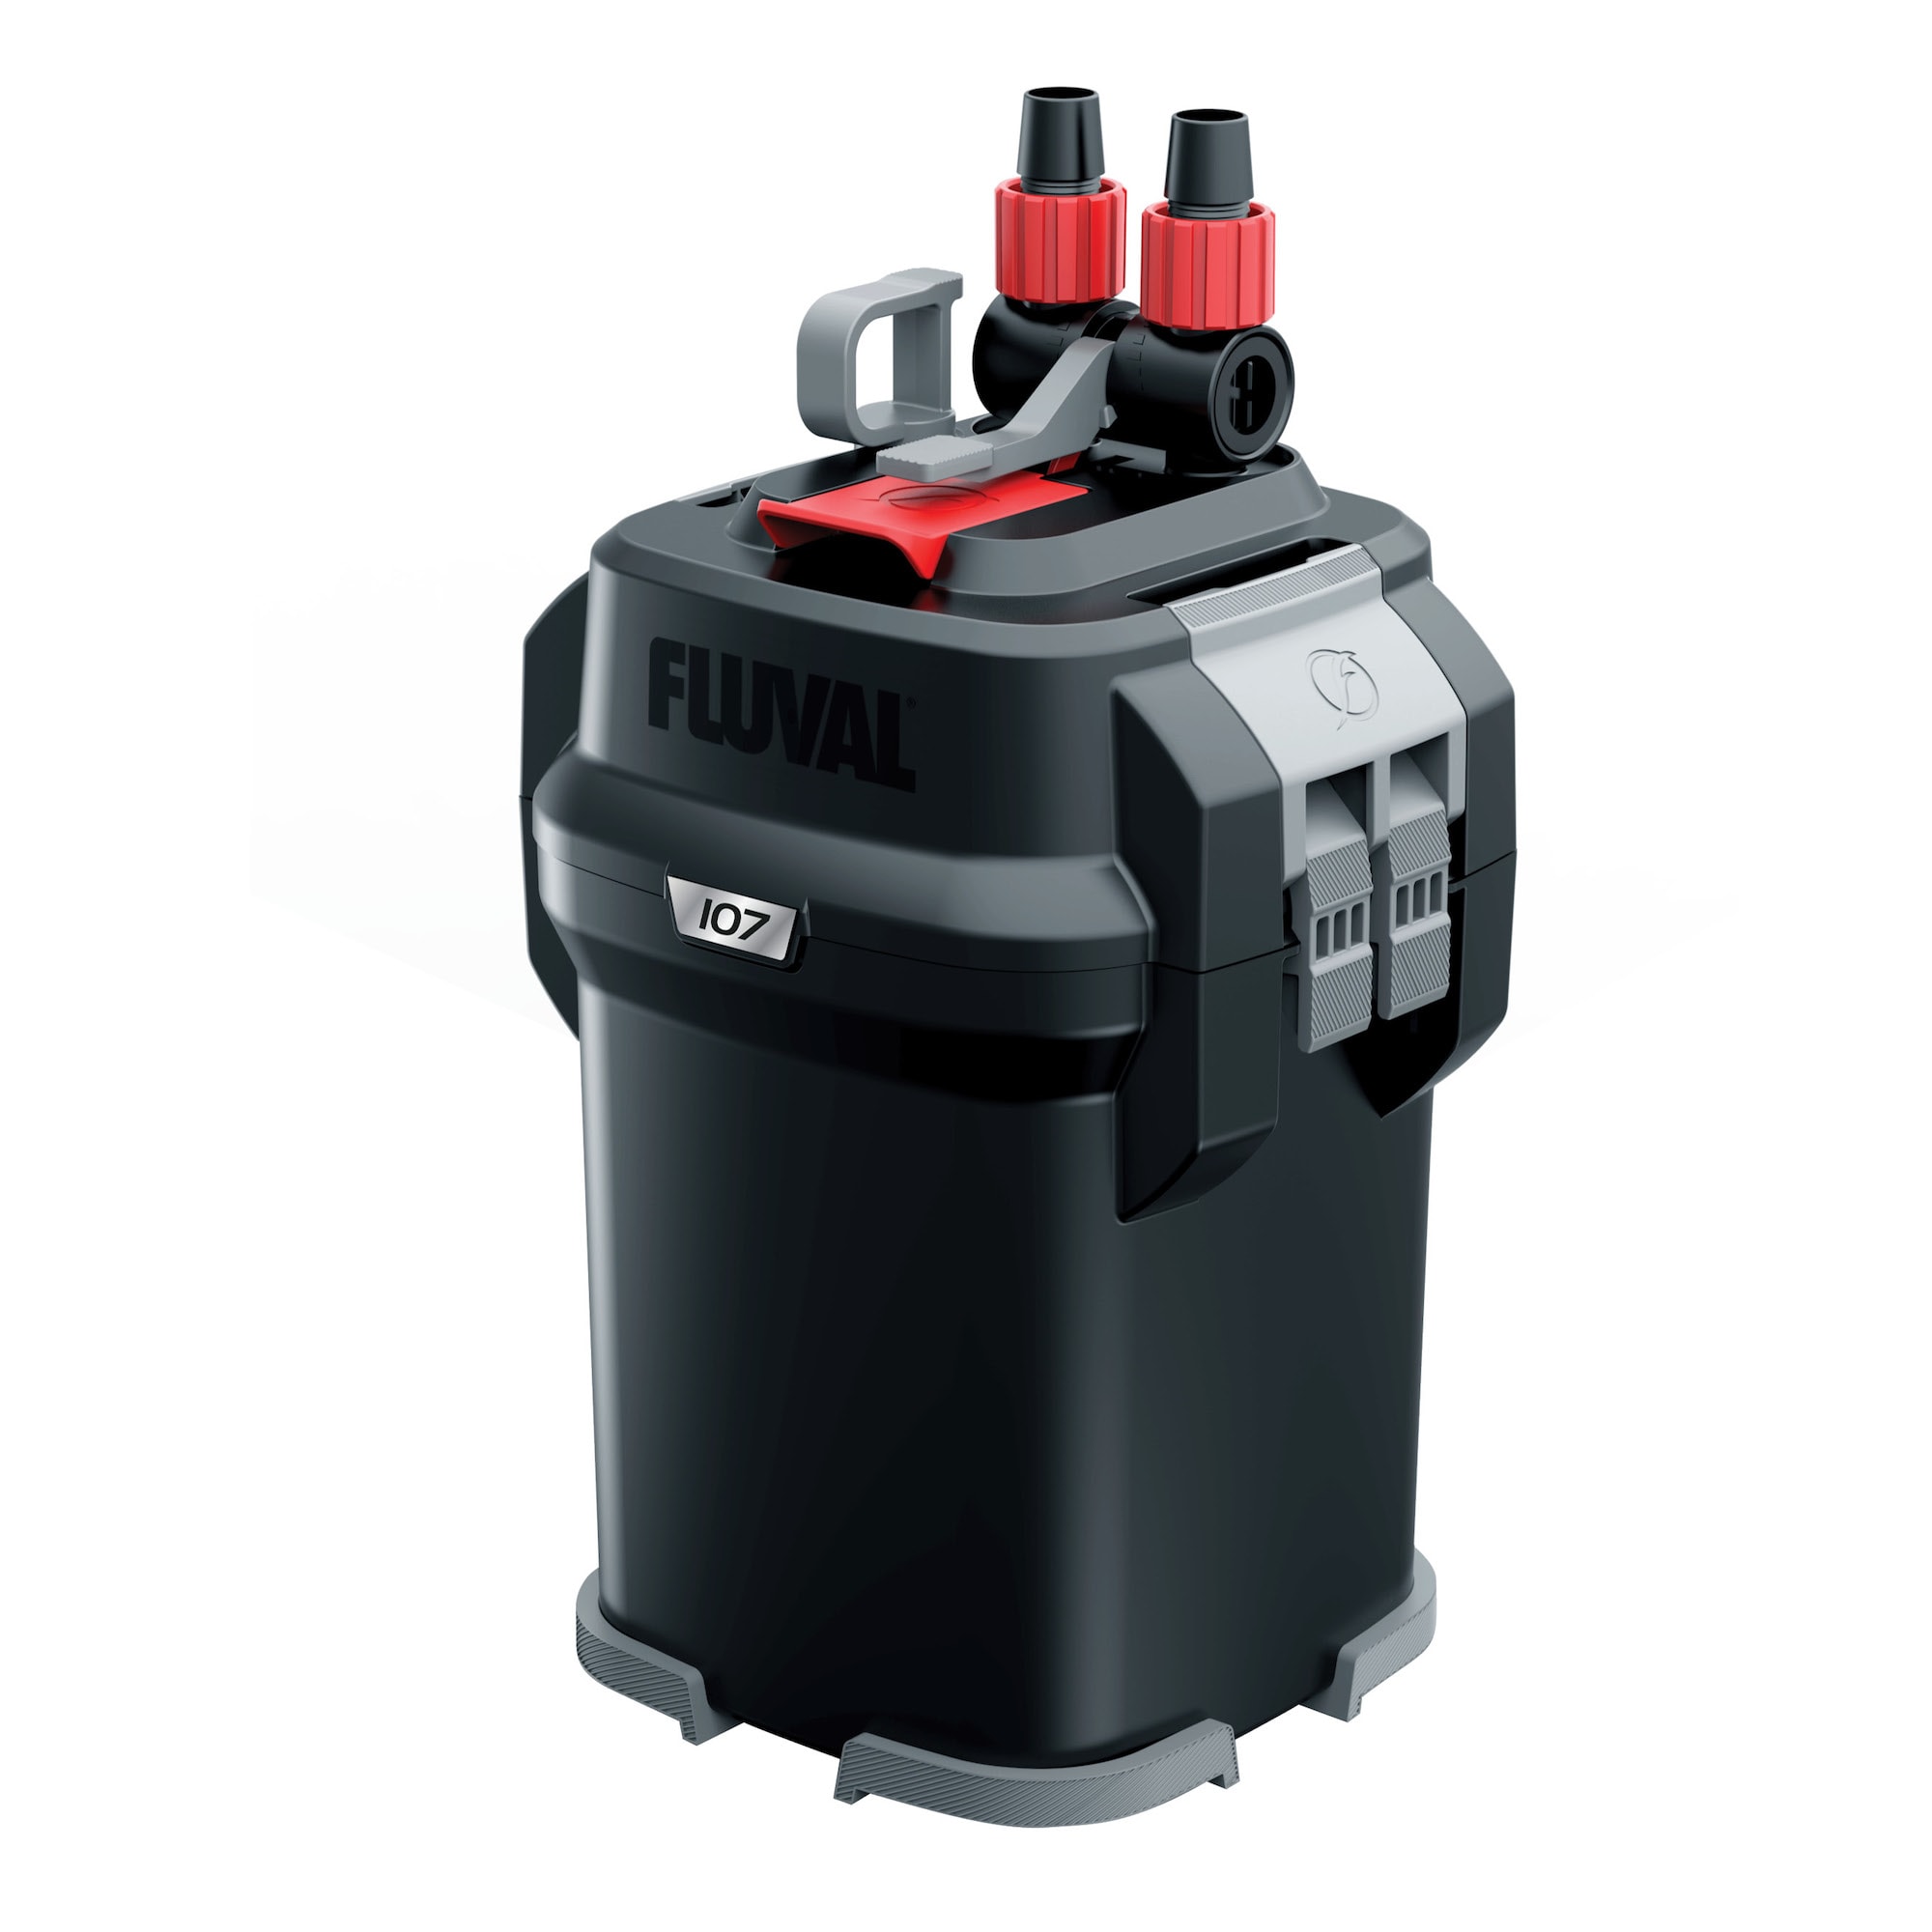 Fluval Performance Canister Filter - 107 AHGA440